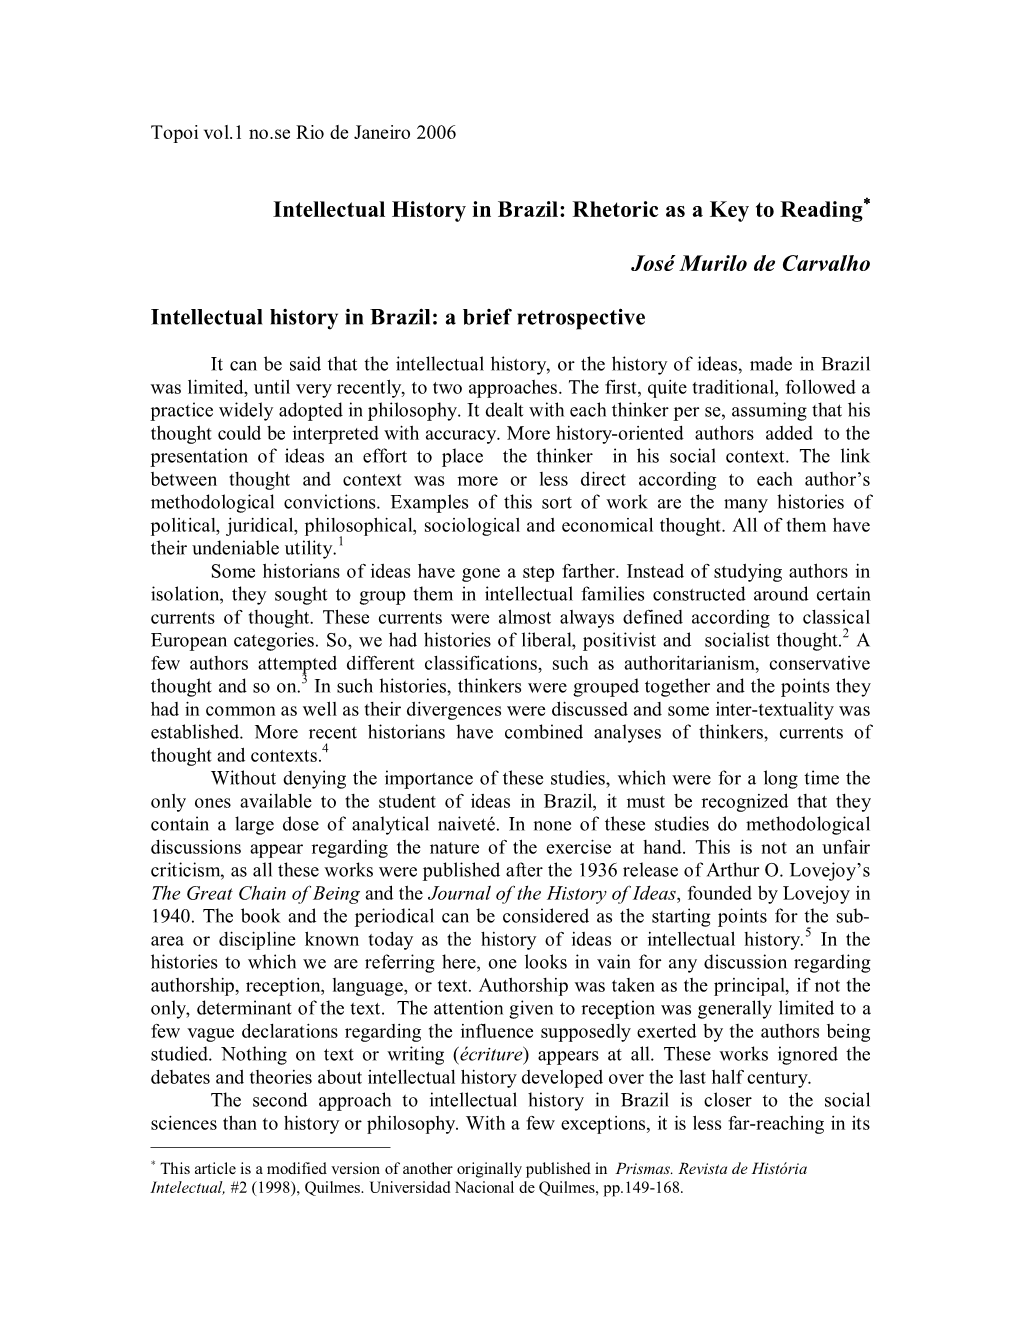 Intellectual History in Brazil: Rhetoric As a Key to Reading∗